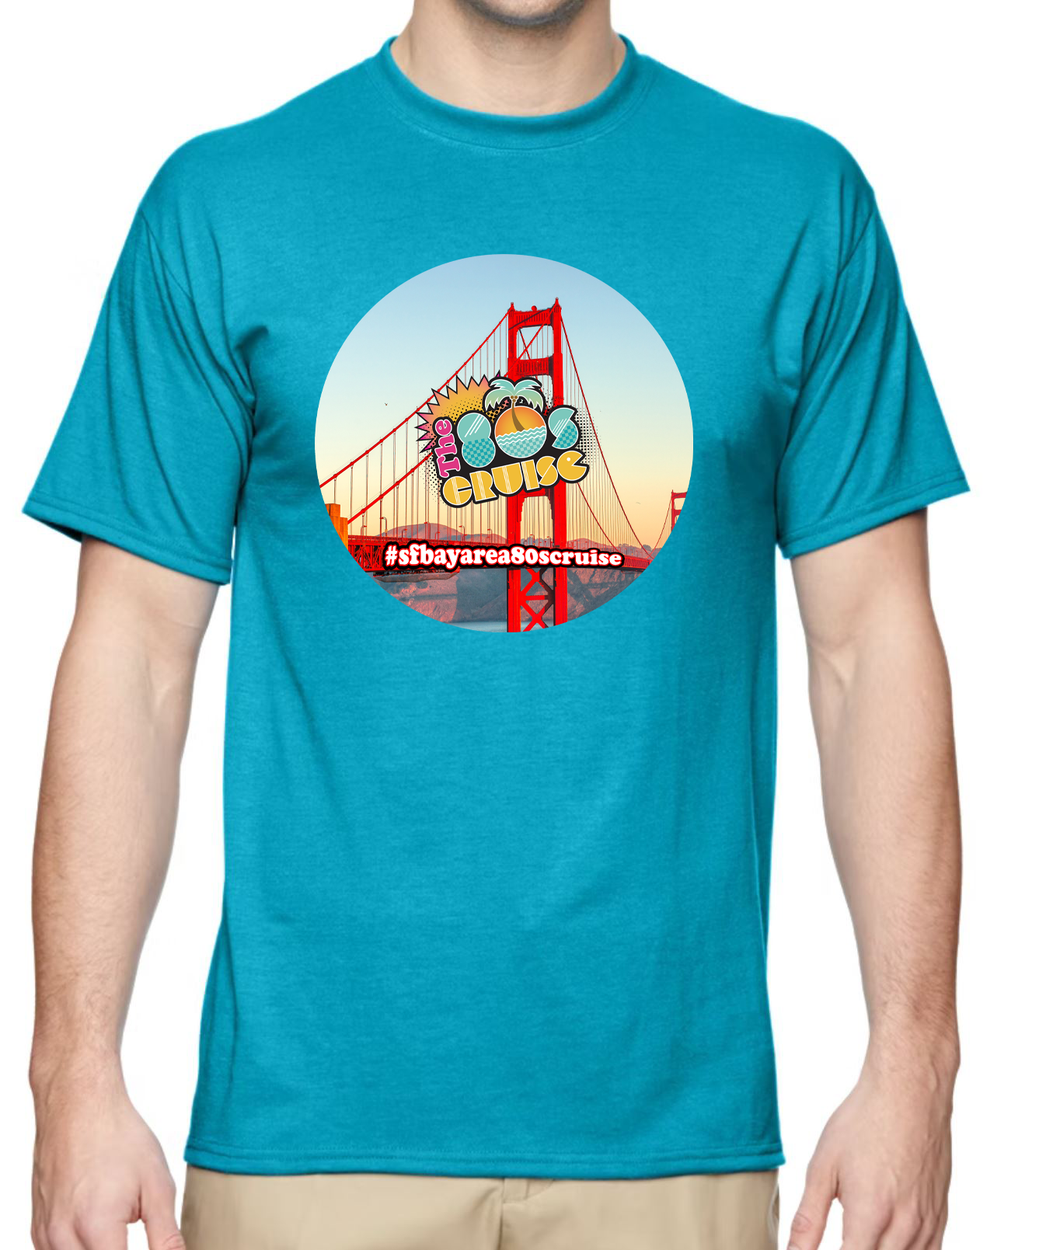 San Francisco Bay Area 80s Cruise T-shirts